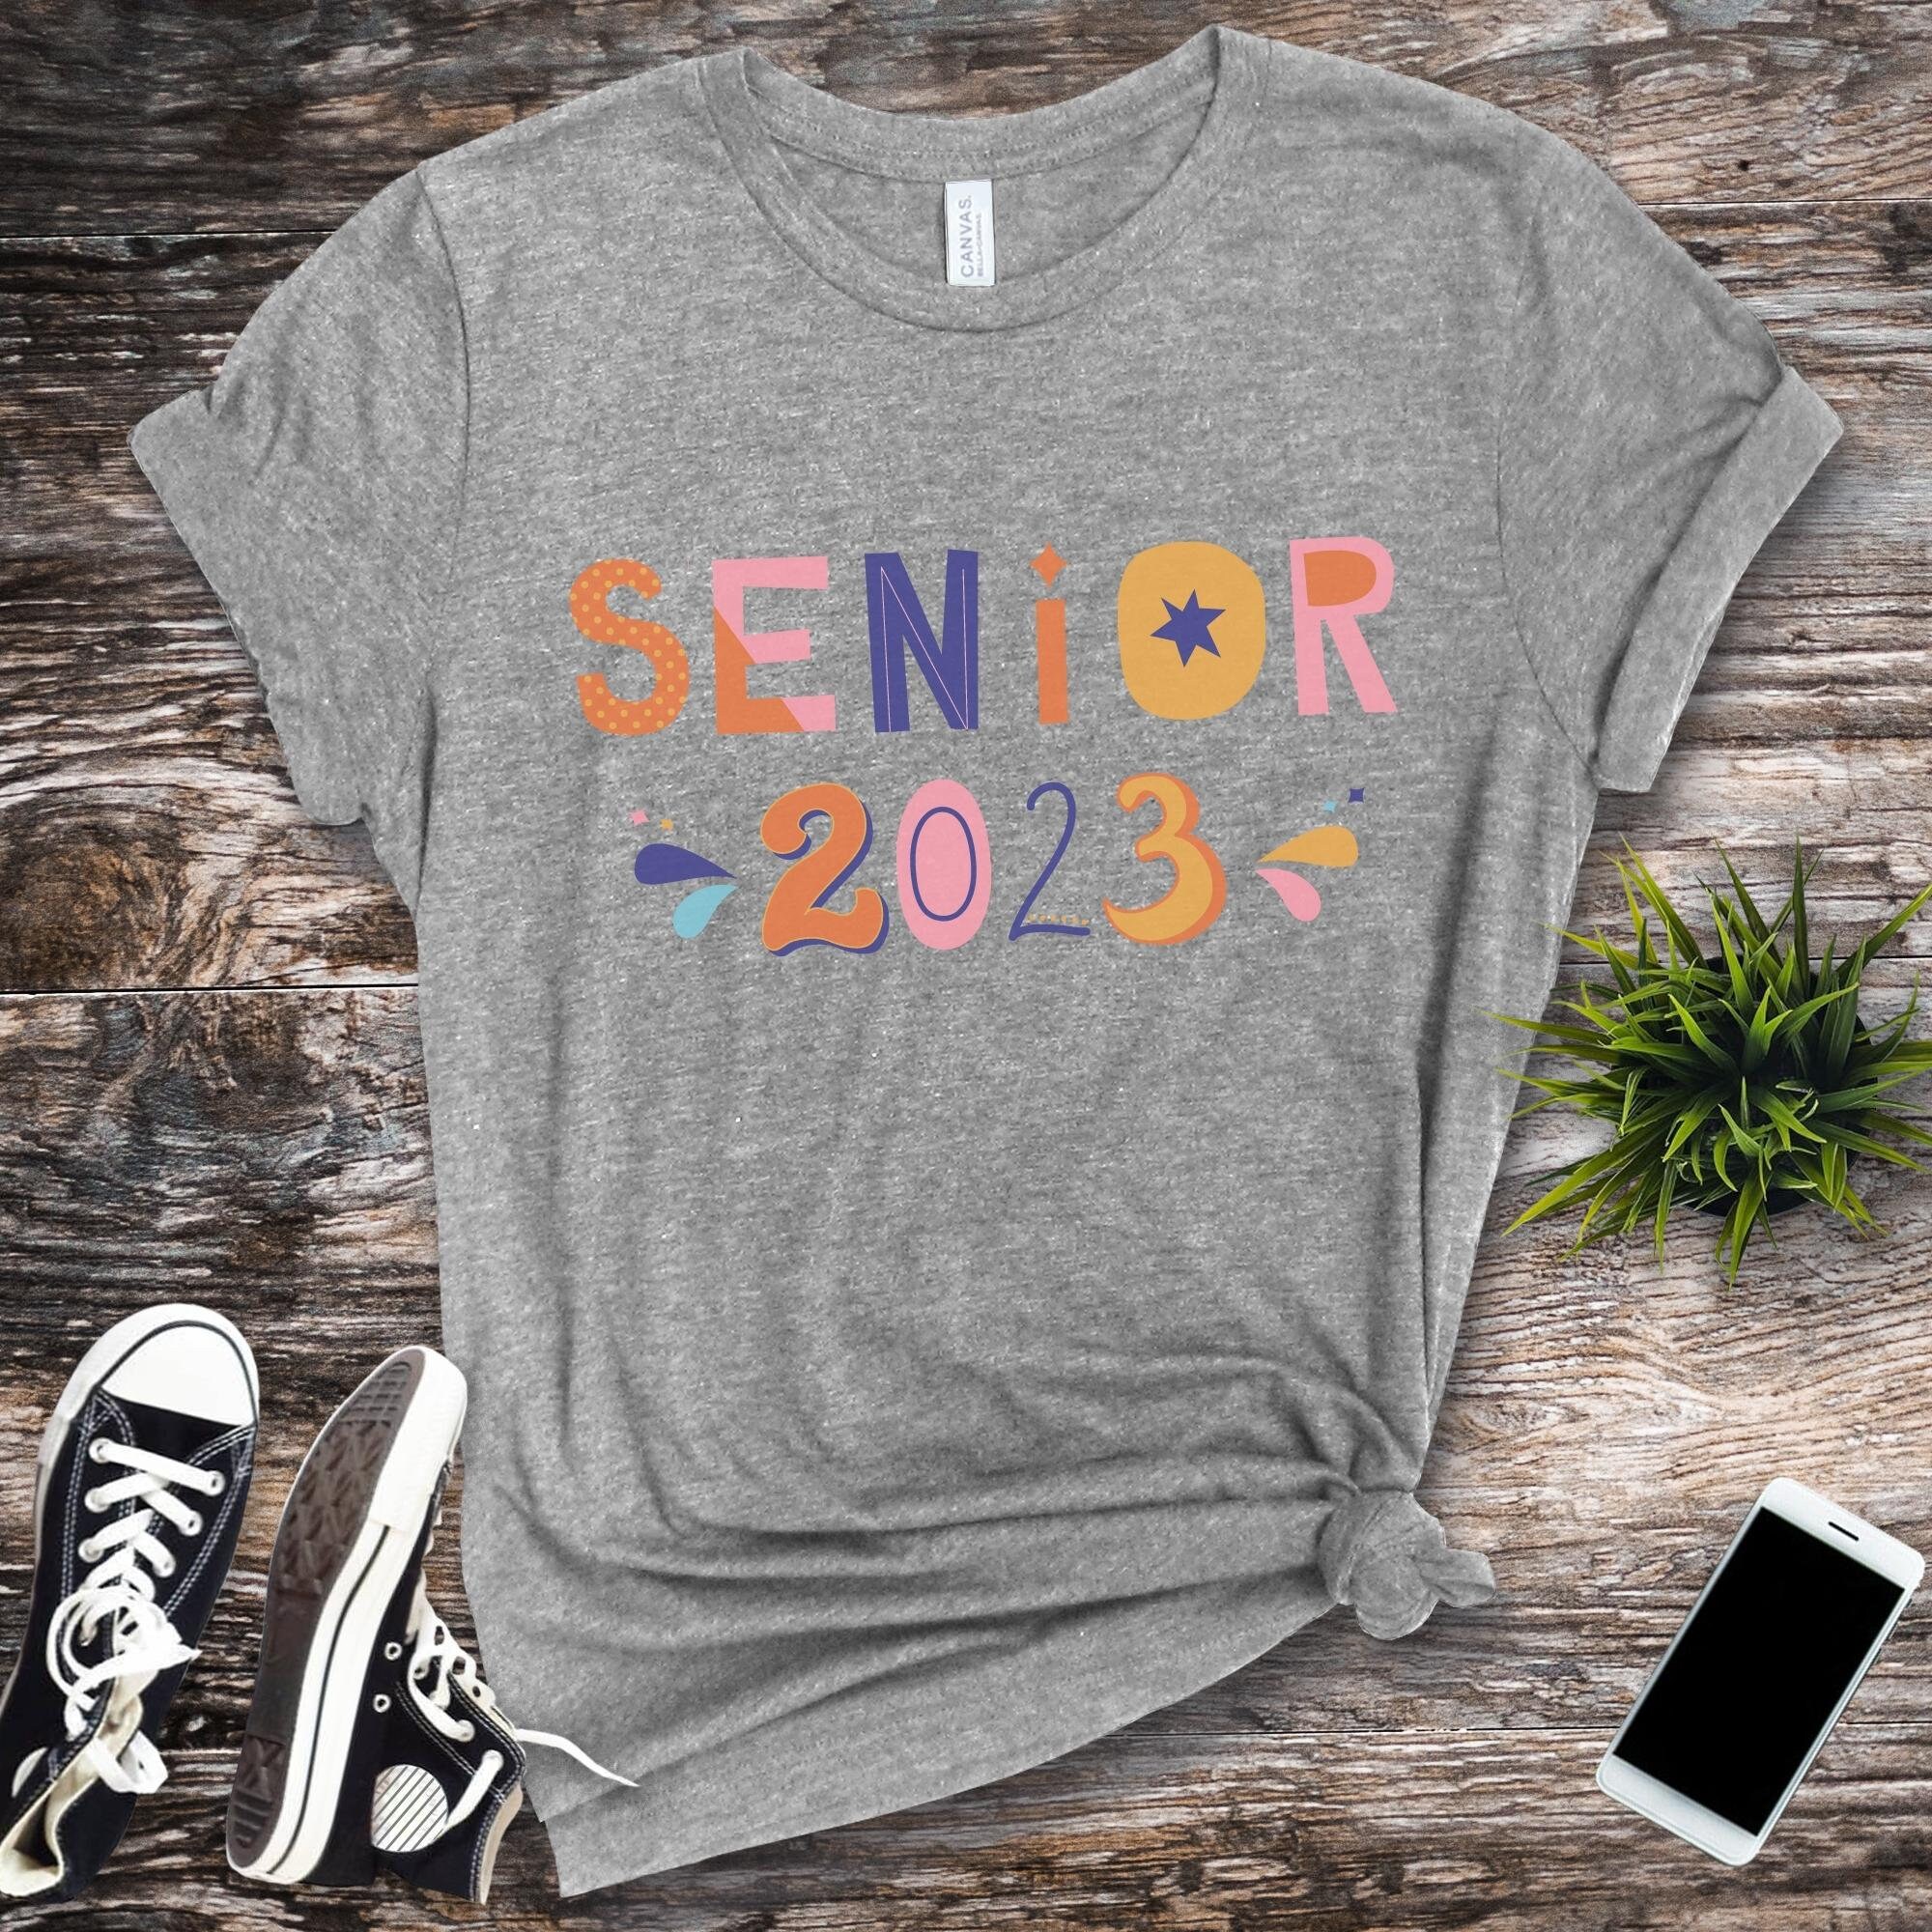 Senior 2023 Shirt 2023 Graduation Gifts Senior Shirt 2023 - Etsy